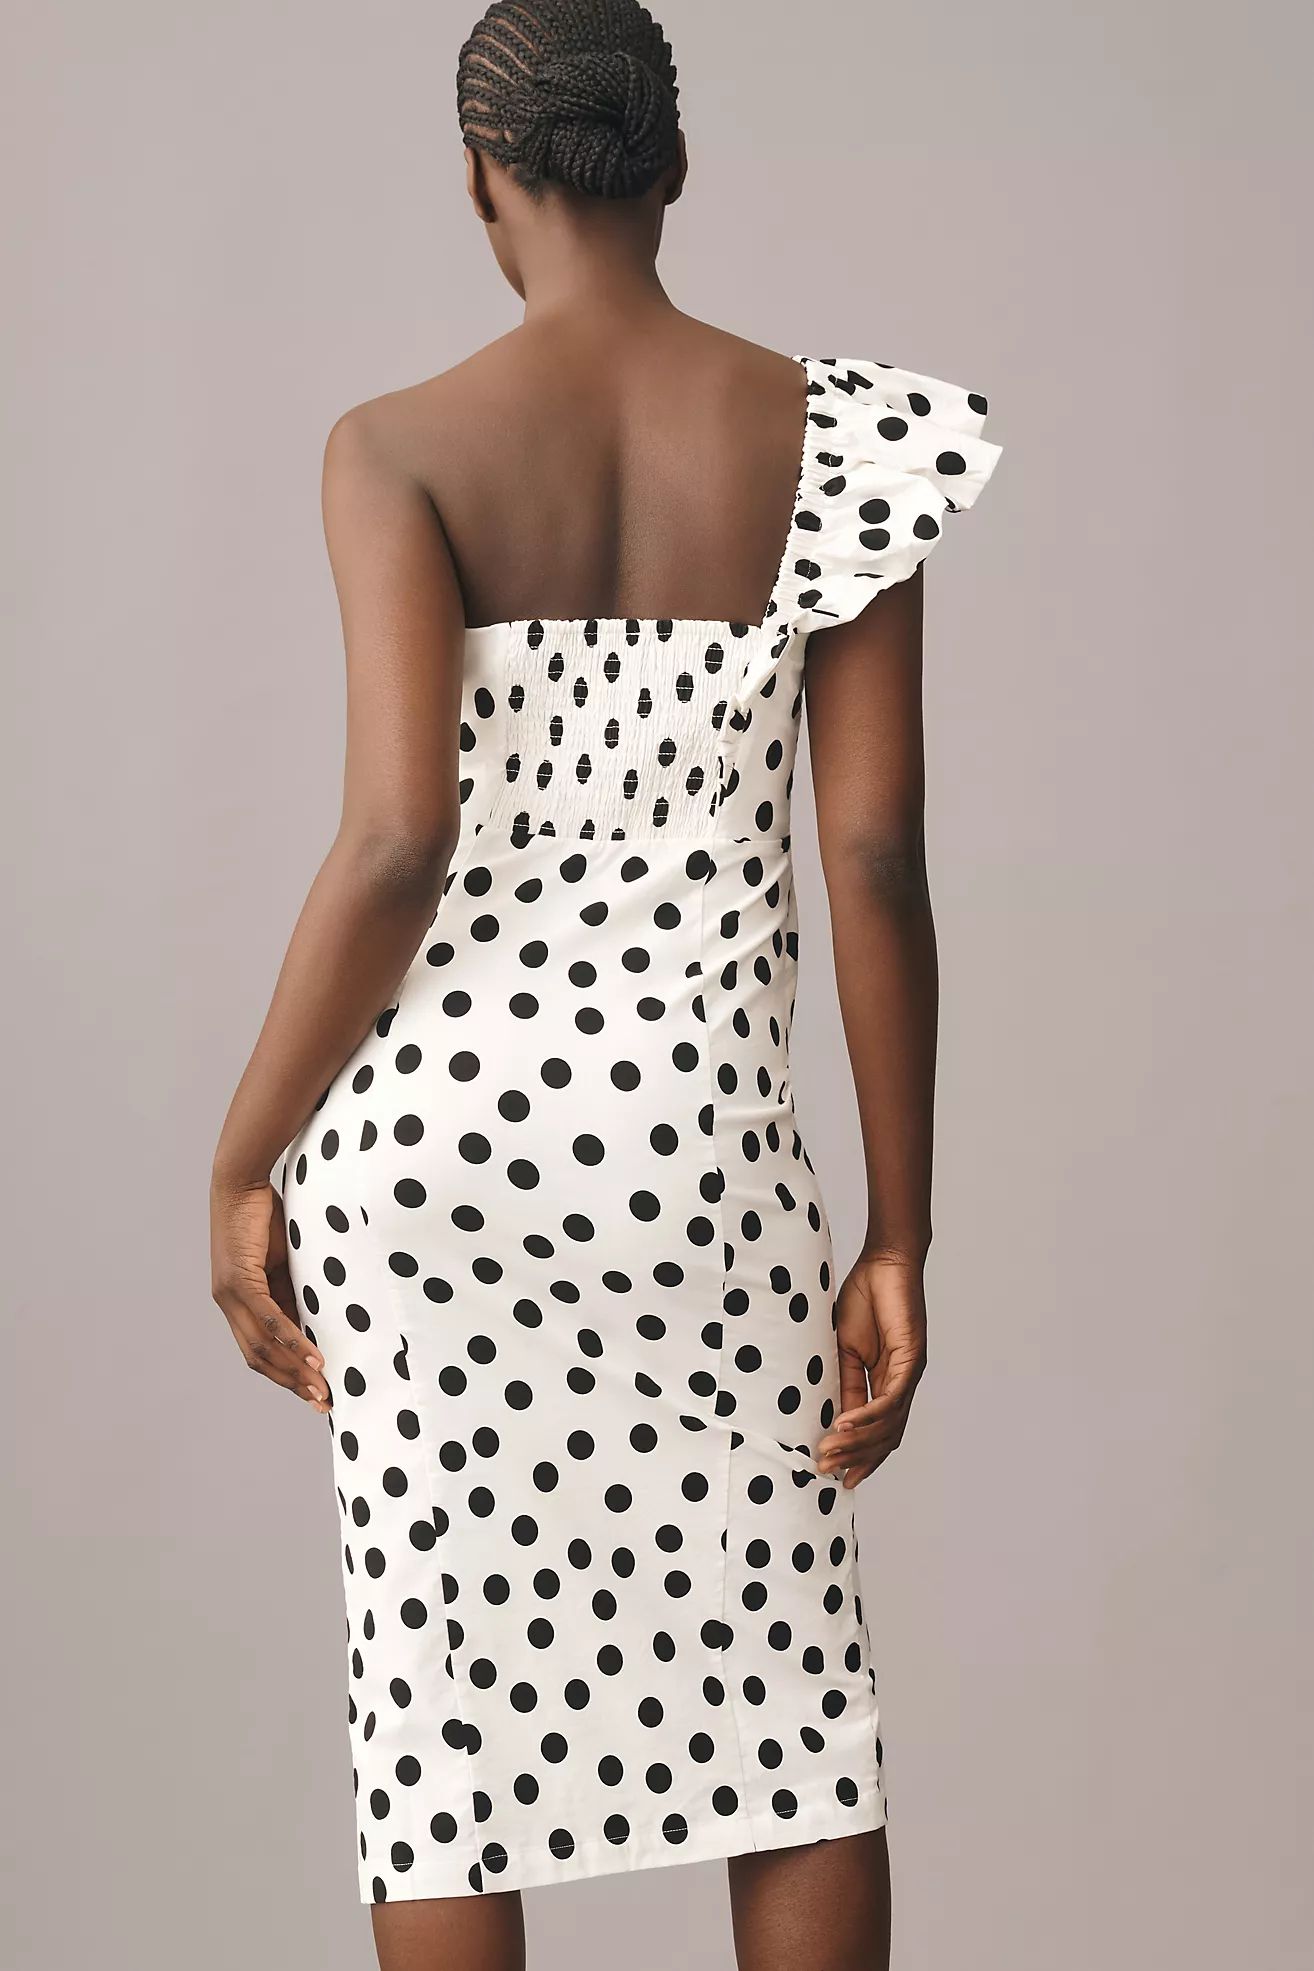 By Anthropologie Ruffle One-Shoulder Slim Dress | Anthropologie (US)